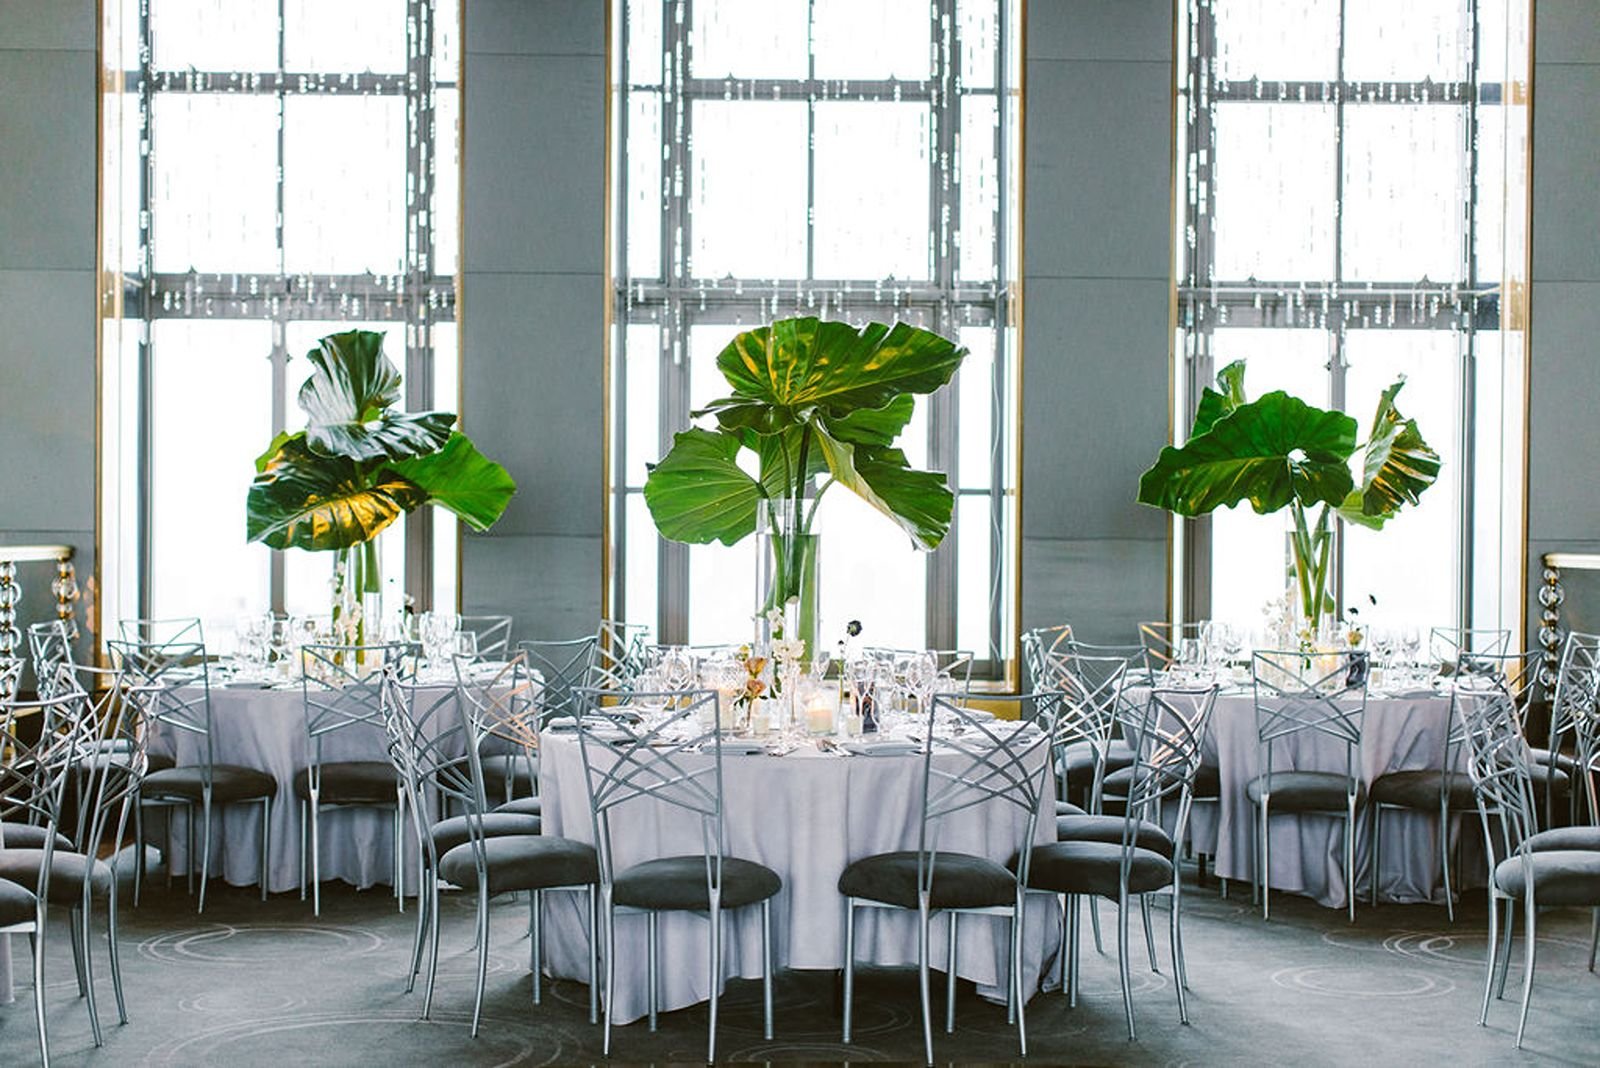 large-leaf-centerpieces-for-Rainbow-room-wedding-design-designed-by-Jove-Meyer.jpg